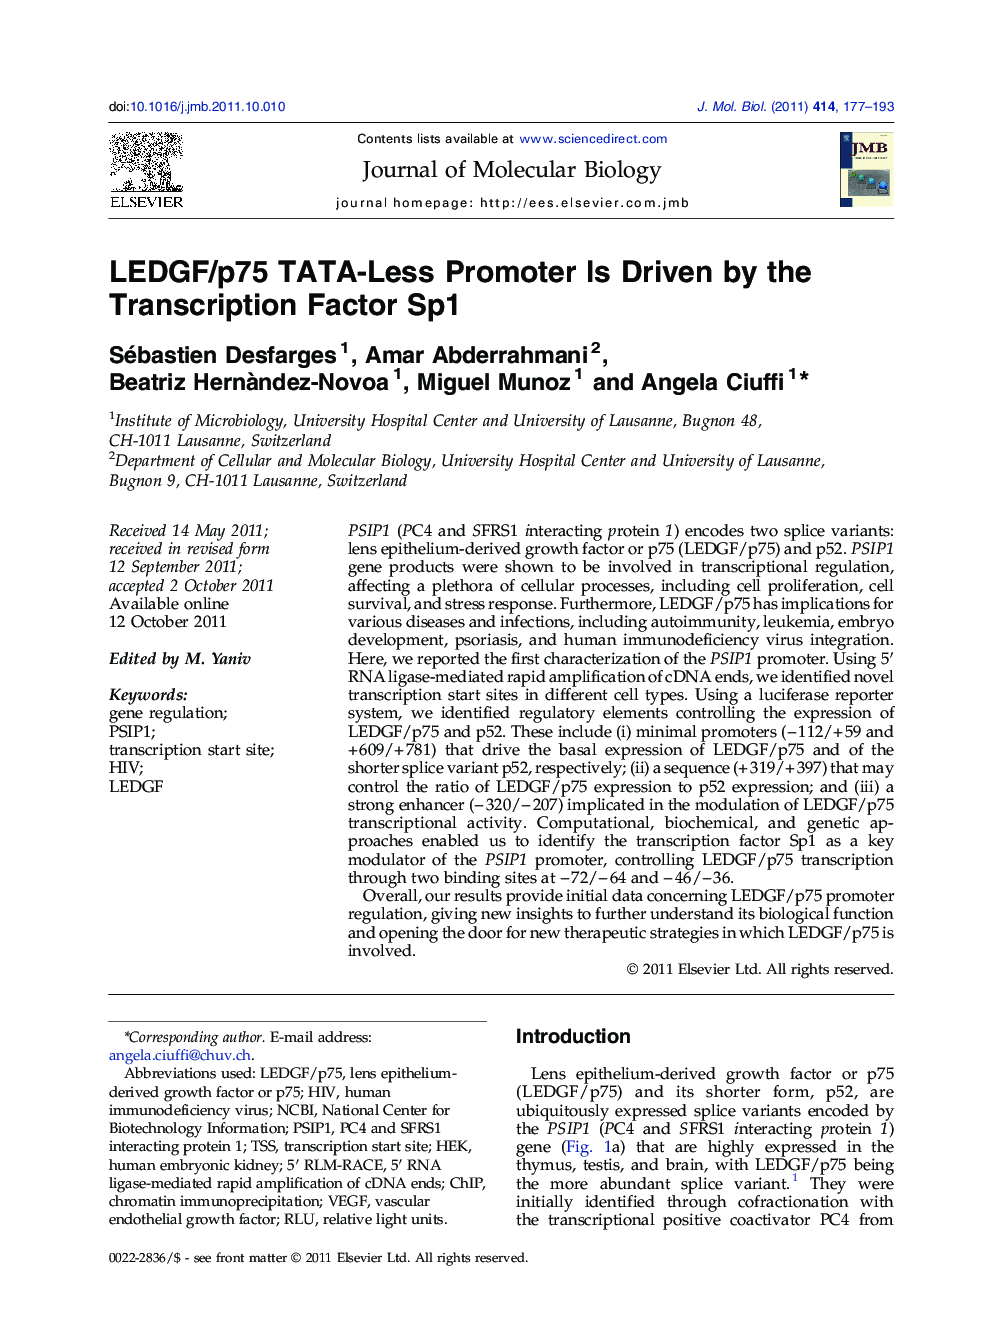 LEDGF/p75 TATA-Less Promoter Is Driven by the Transcription Factor Sp1